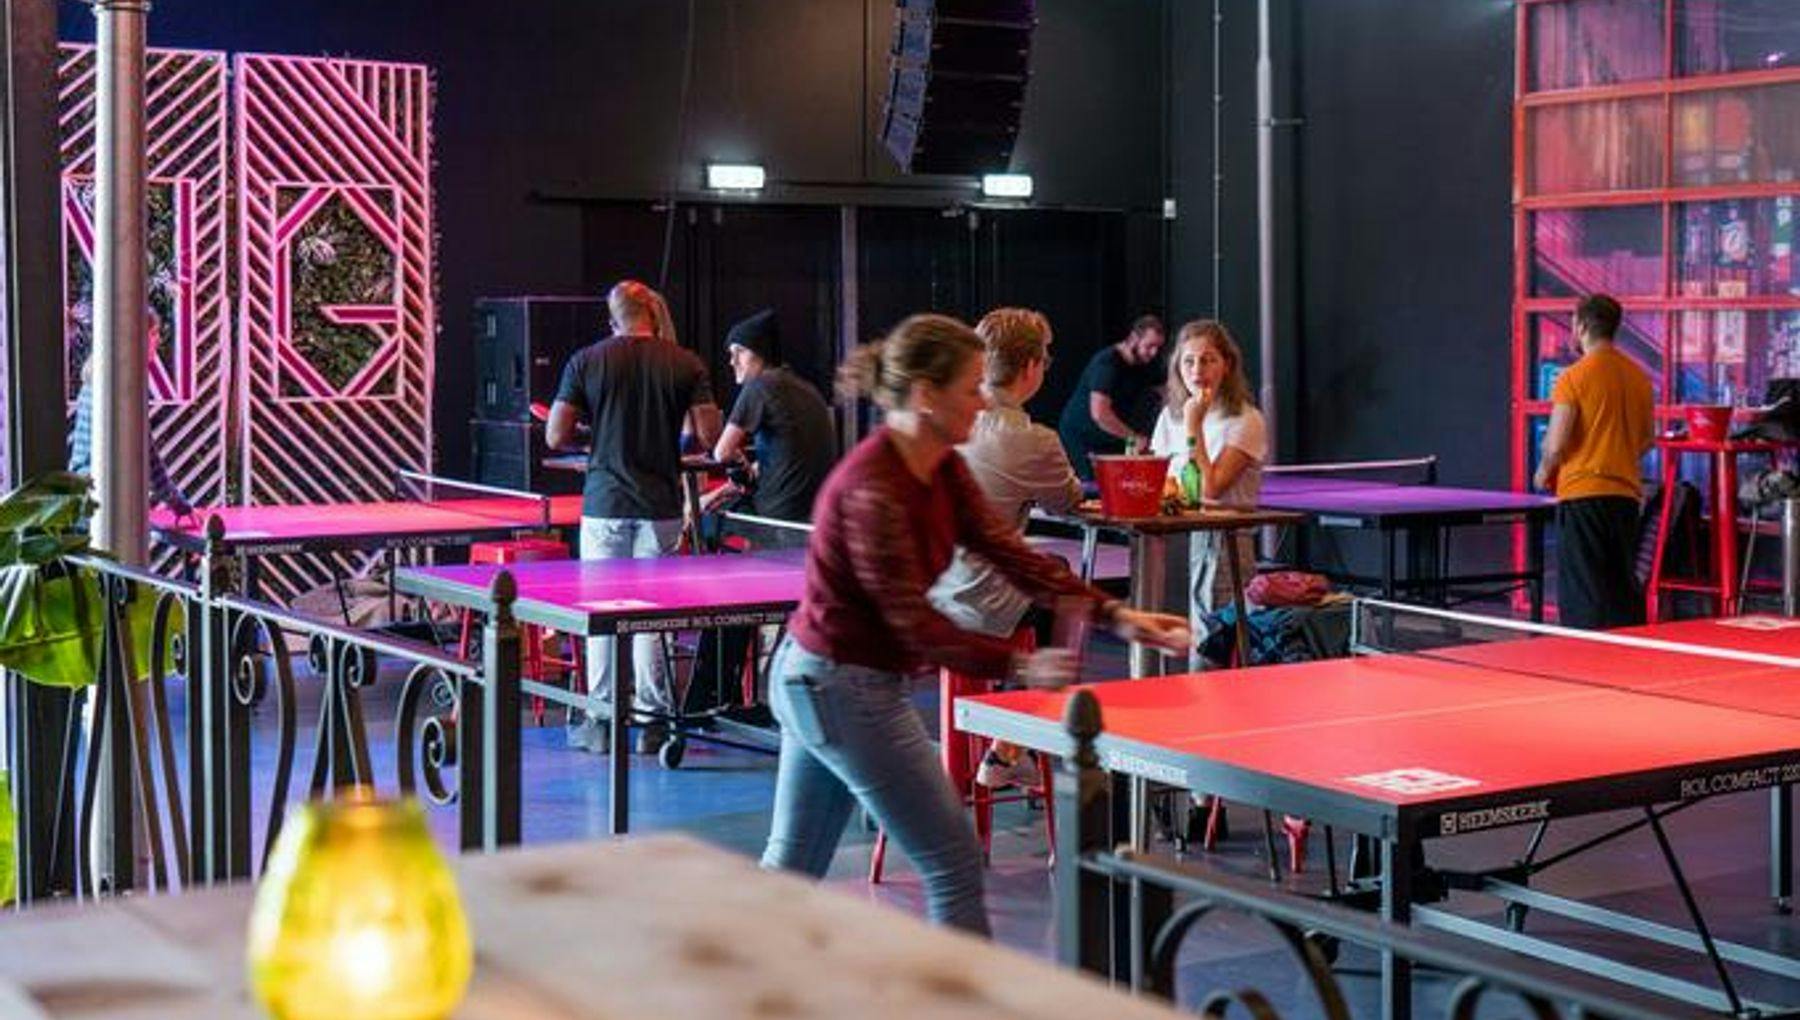 Ping Pong bar, mensen spelen ping pong, kaarsjes in beeld